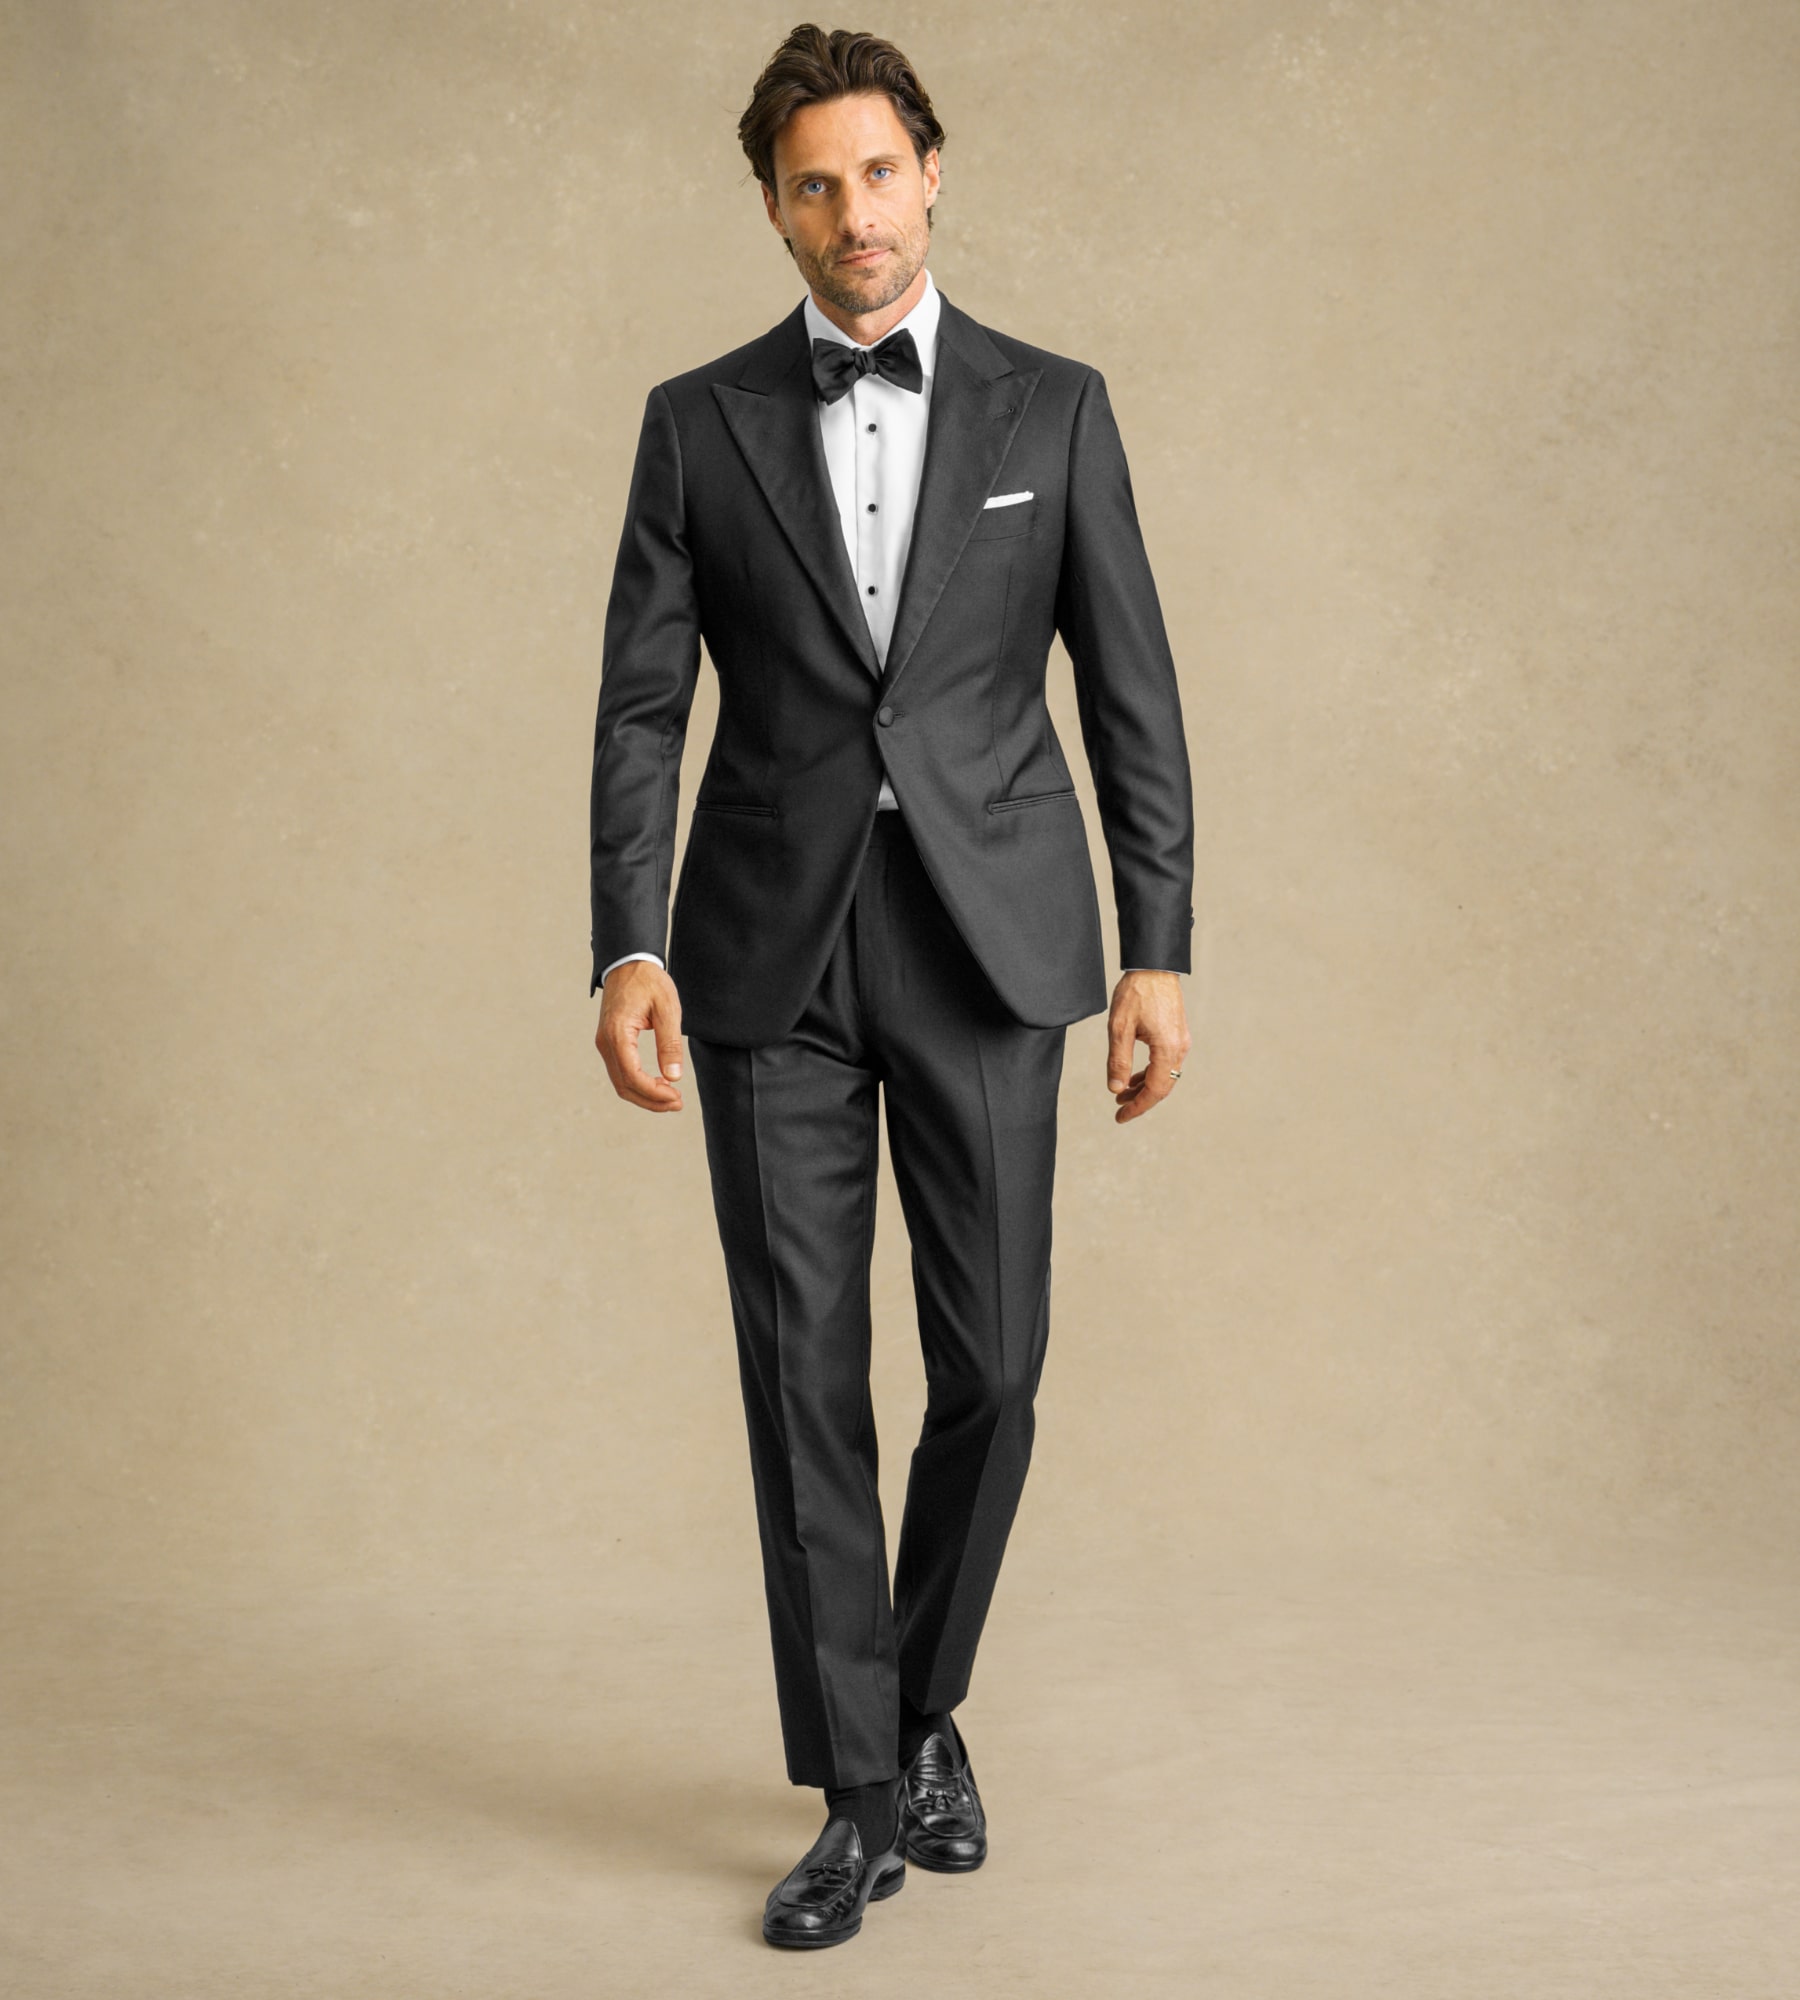 Mens Wedding Attire: Best Suits & Dress Ideas for Grooms